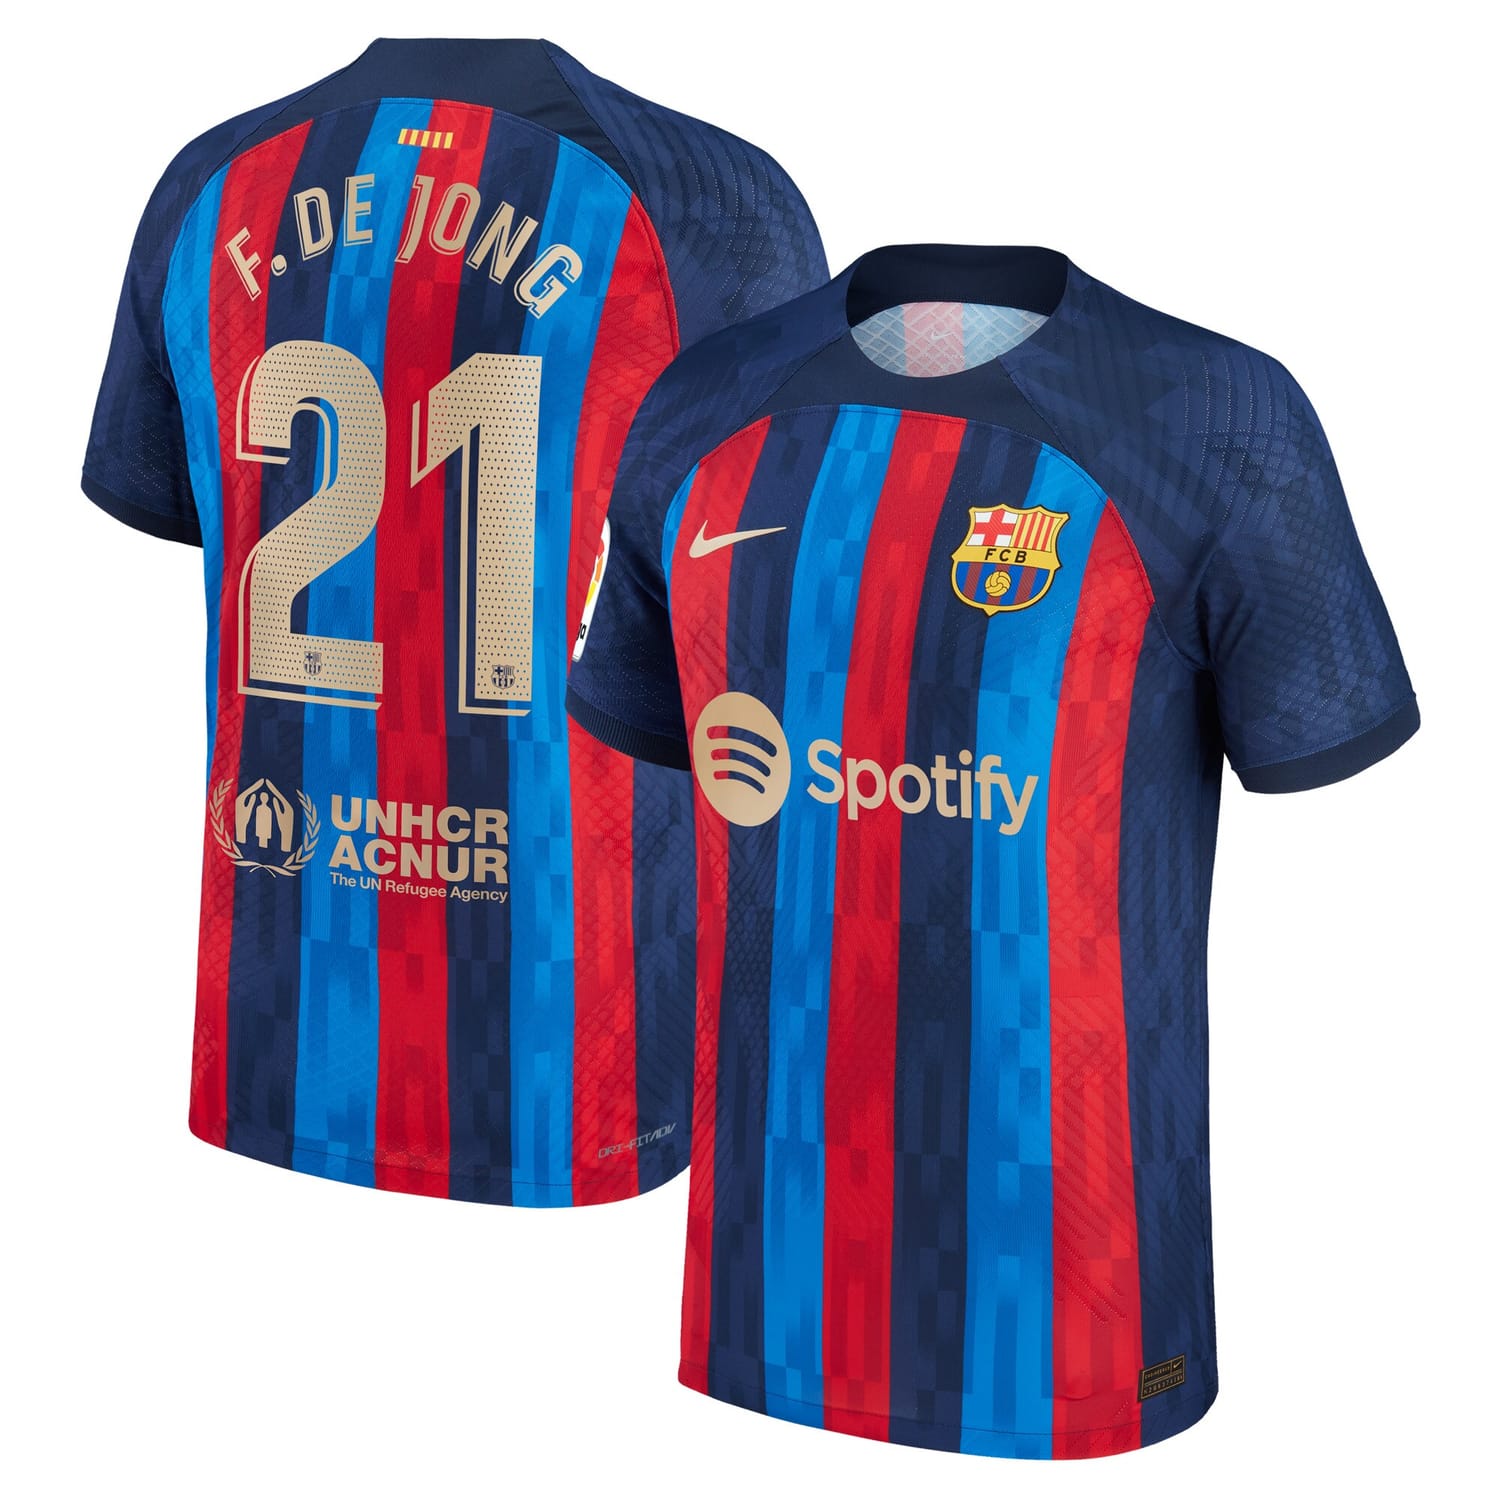 La Liga Barcelona Home Authentic Jersey Shirt Blue 2022-23 player Frenkie de Jong printing for Men